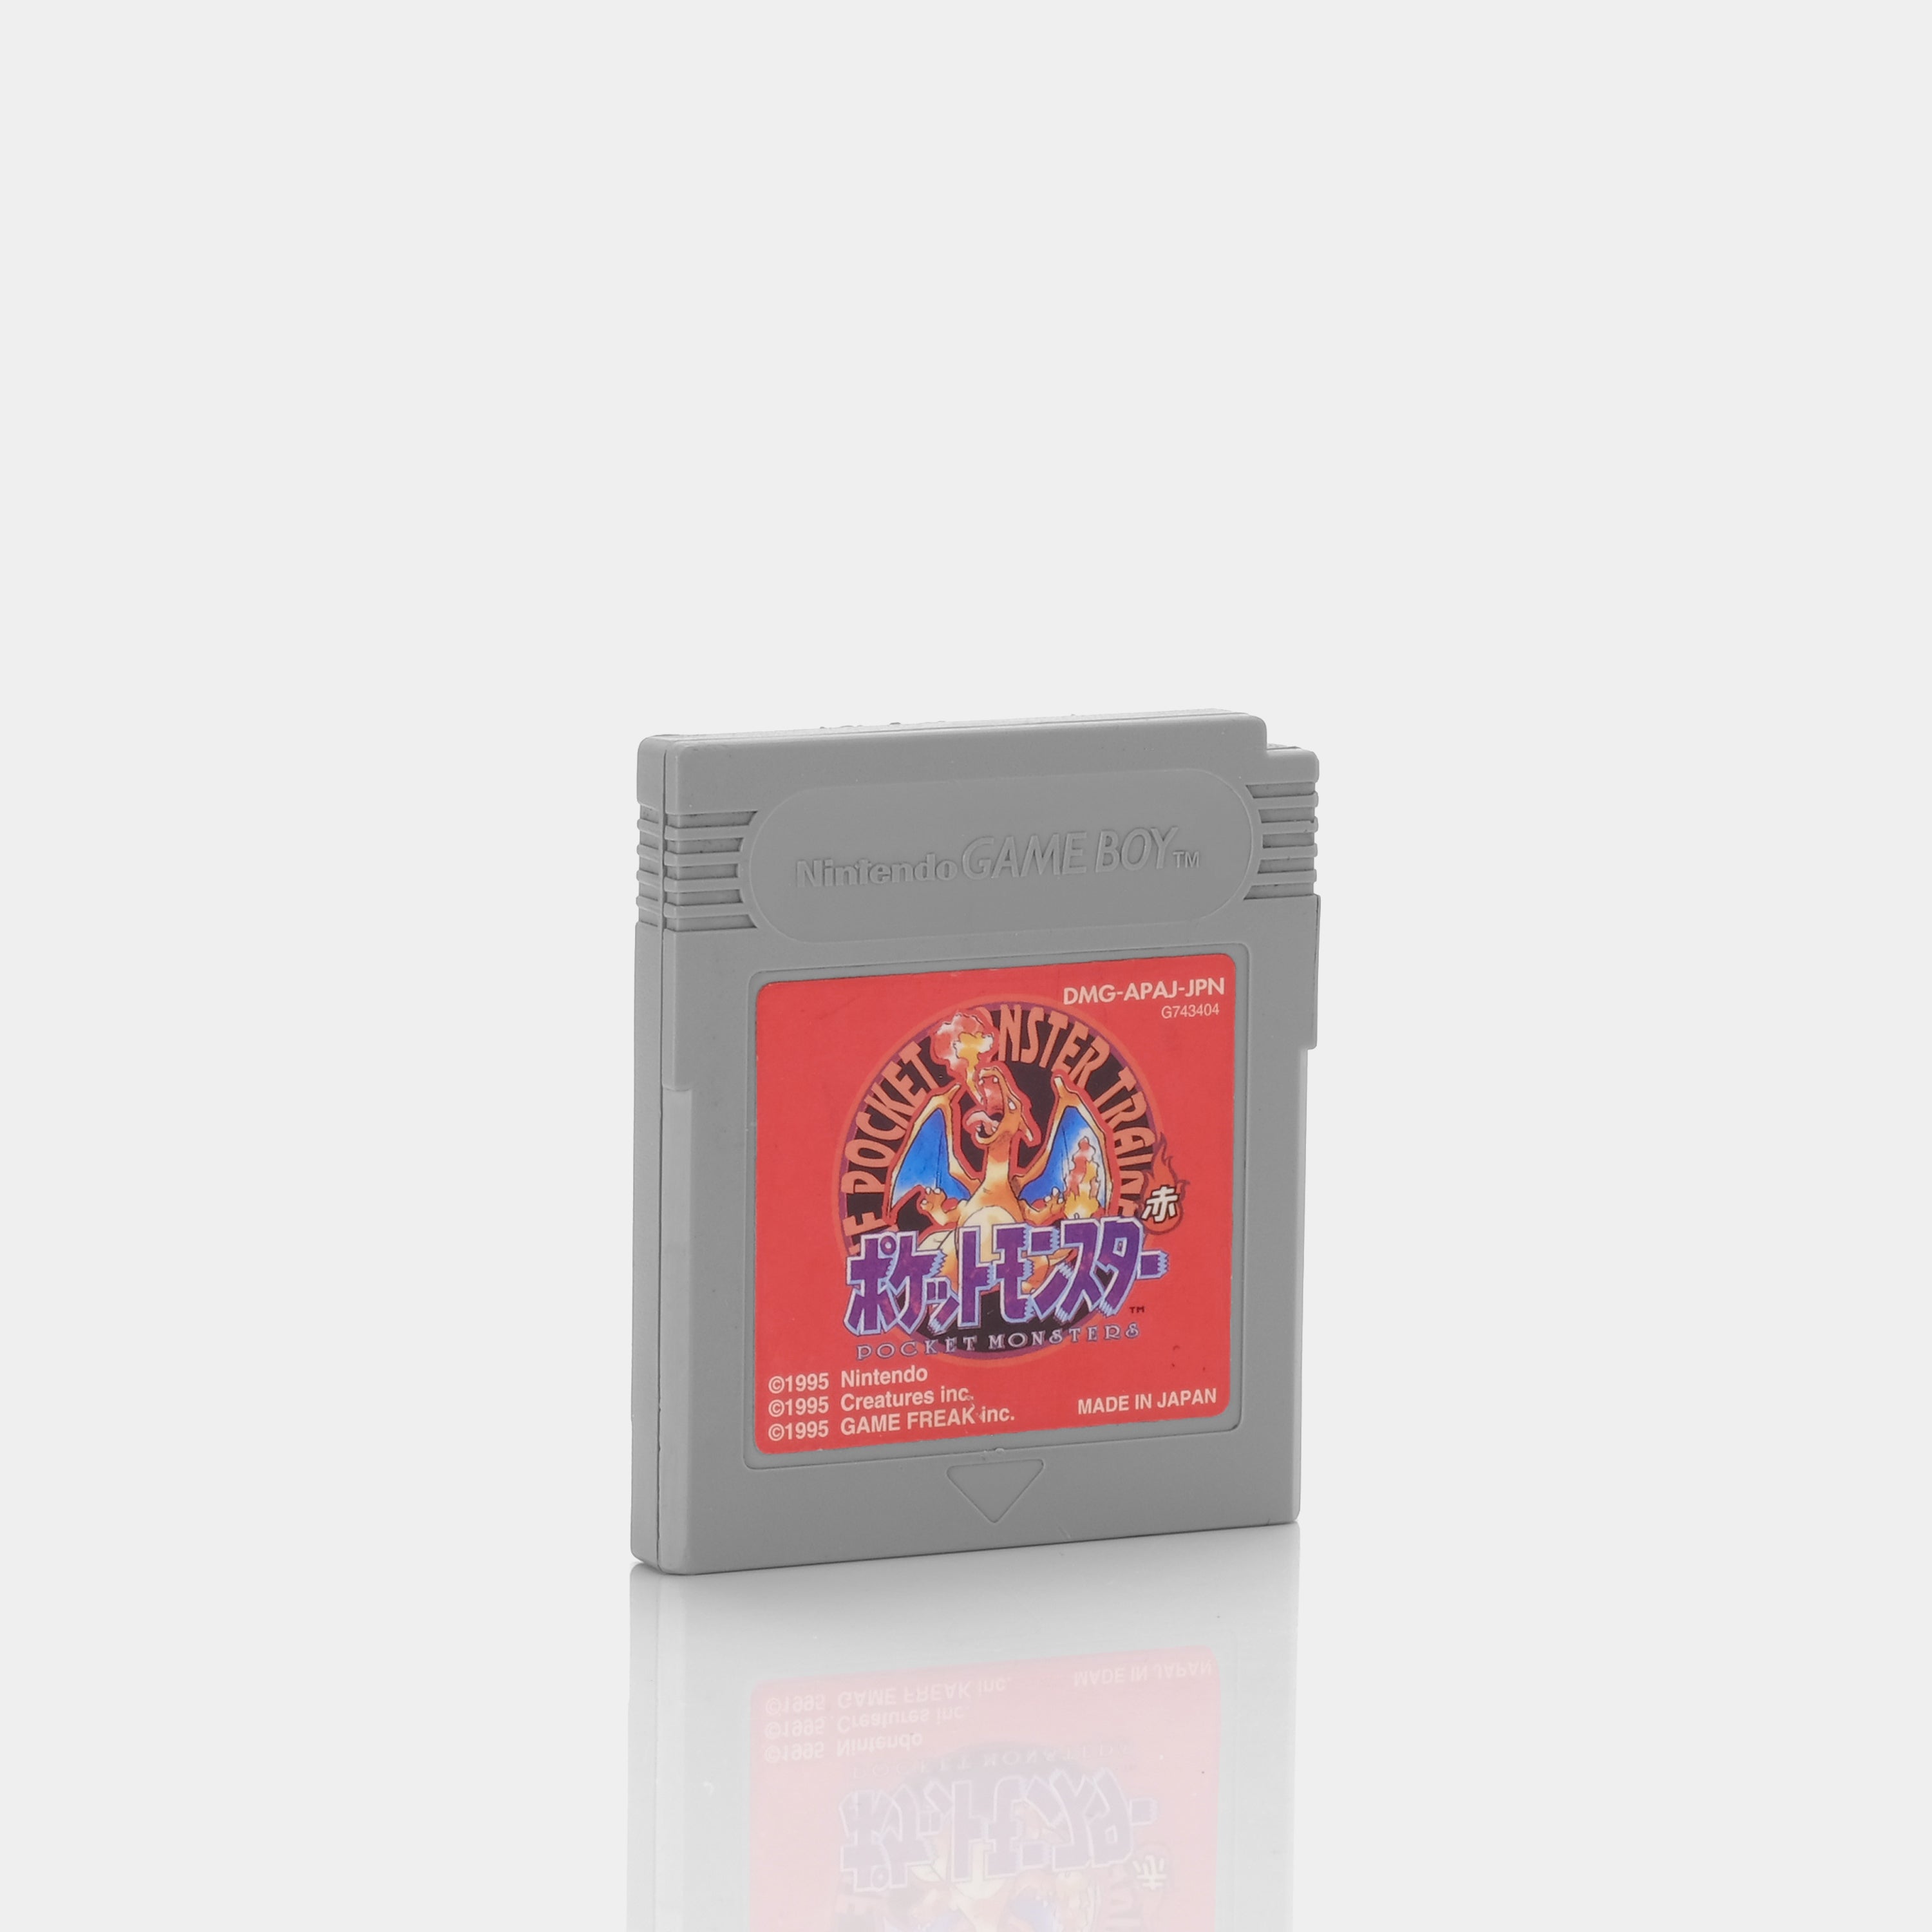 Pokemon Red Version - Game Boy, Game Boy